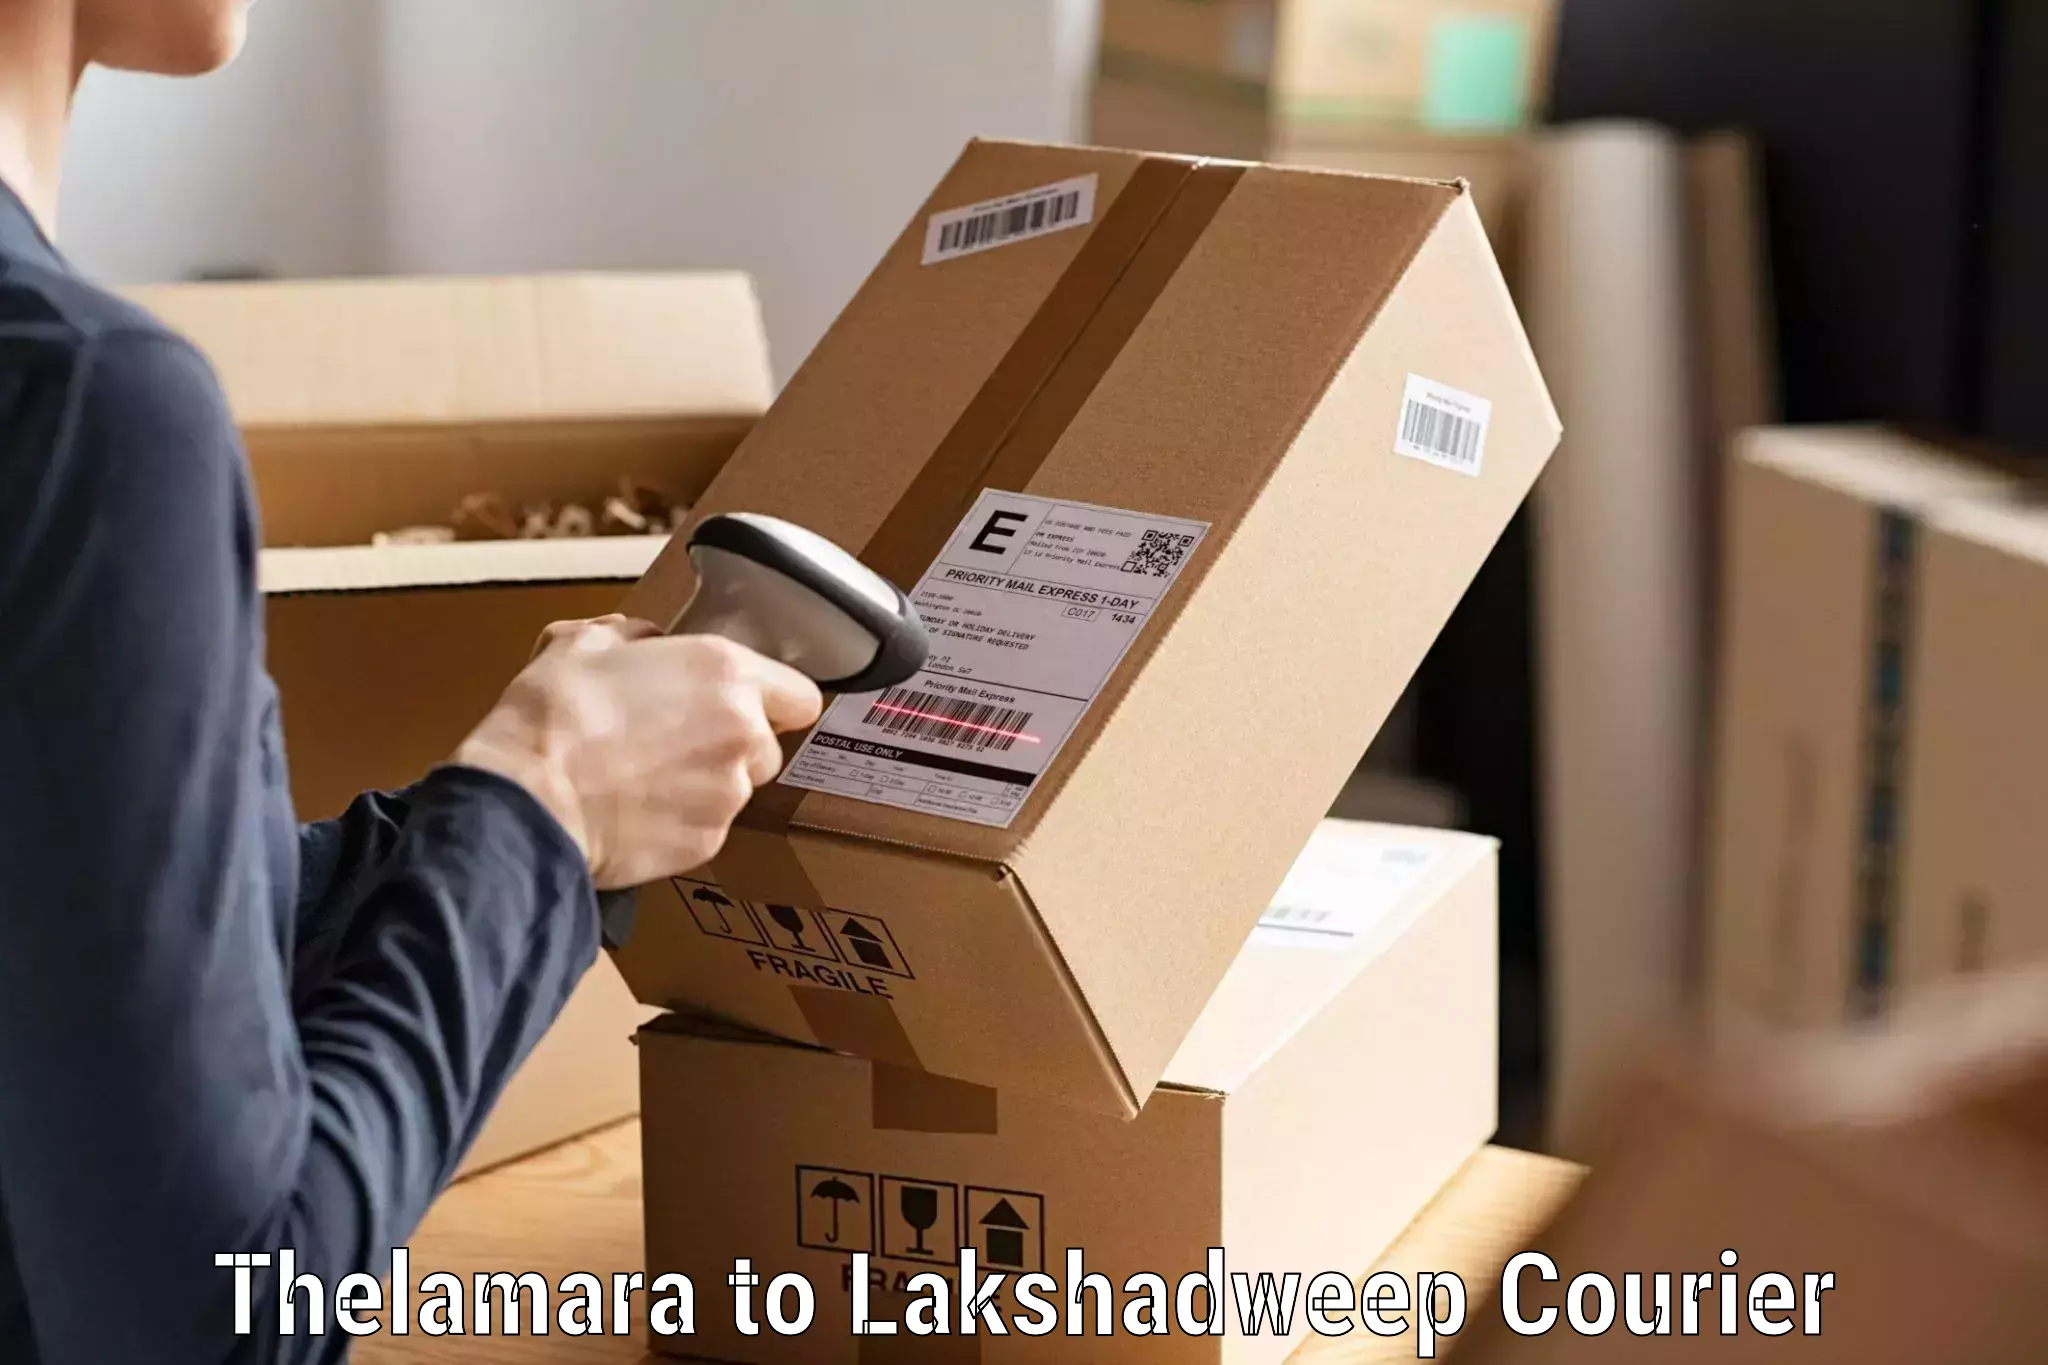 Fast-track shipping solutions Thelamara to Lakshadweep